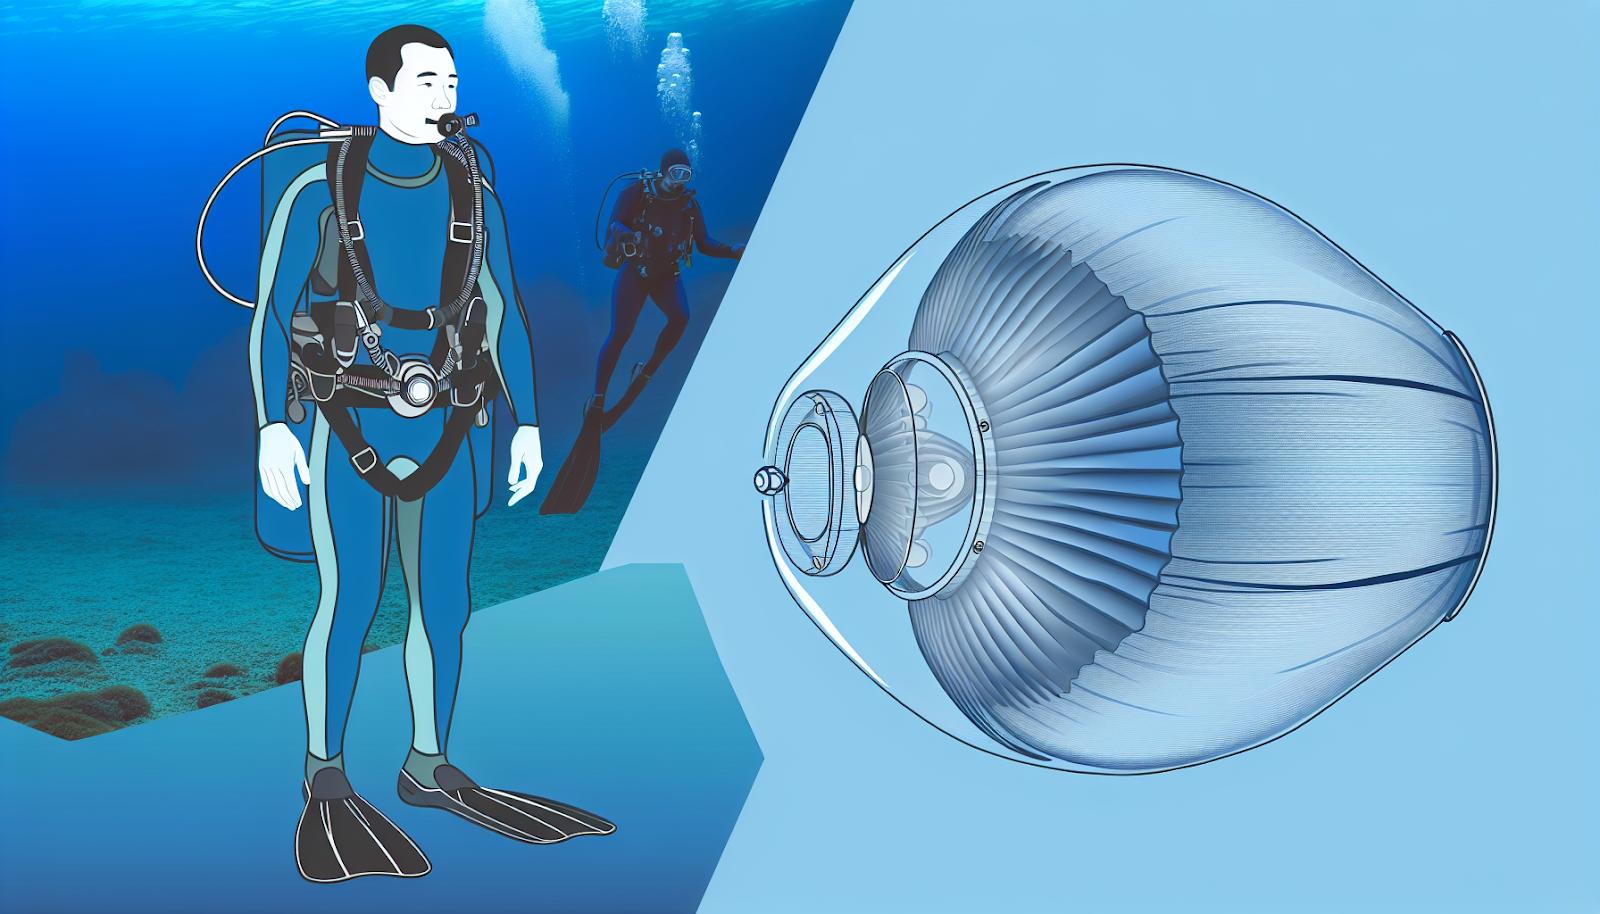 Nomad's flotation shell providing buoyancy underwater